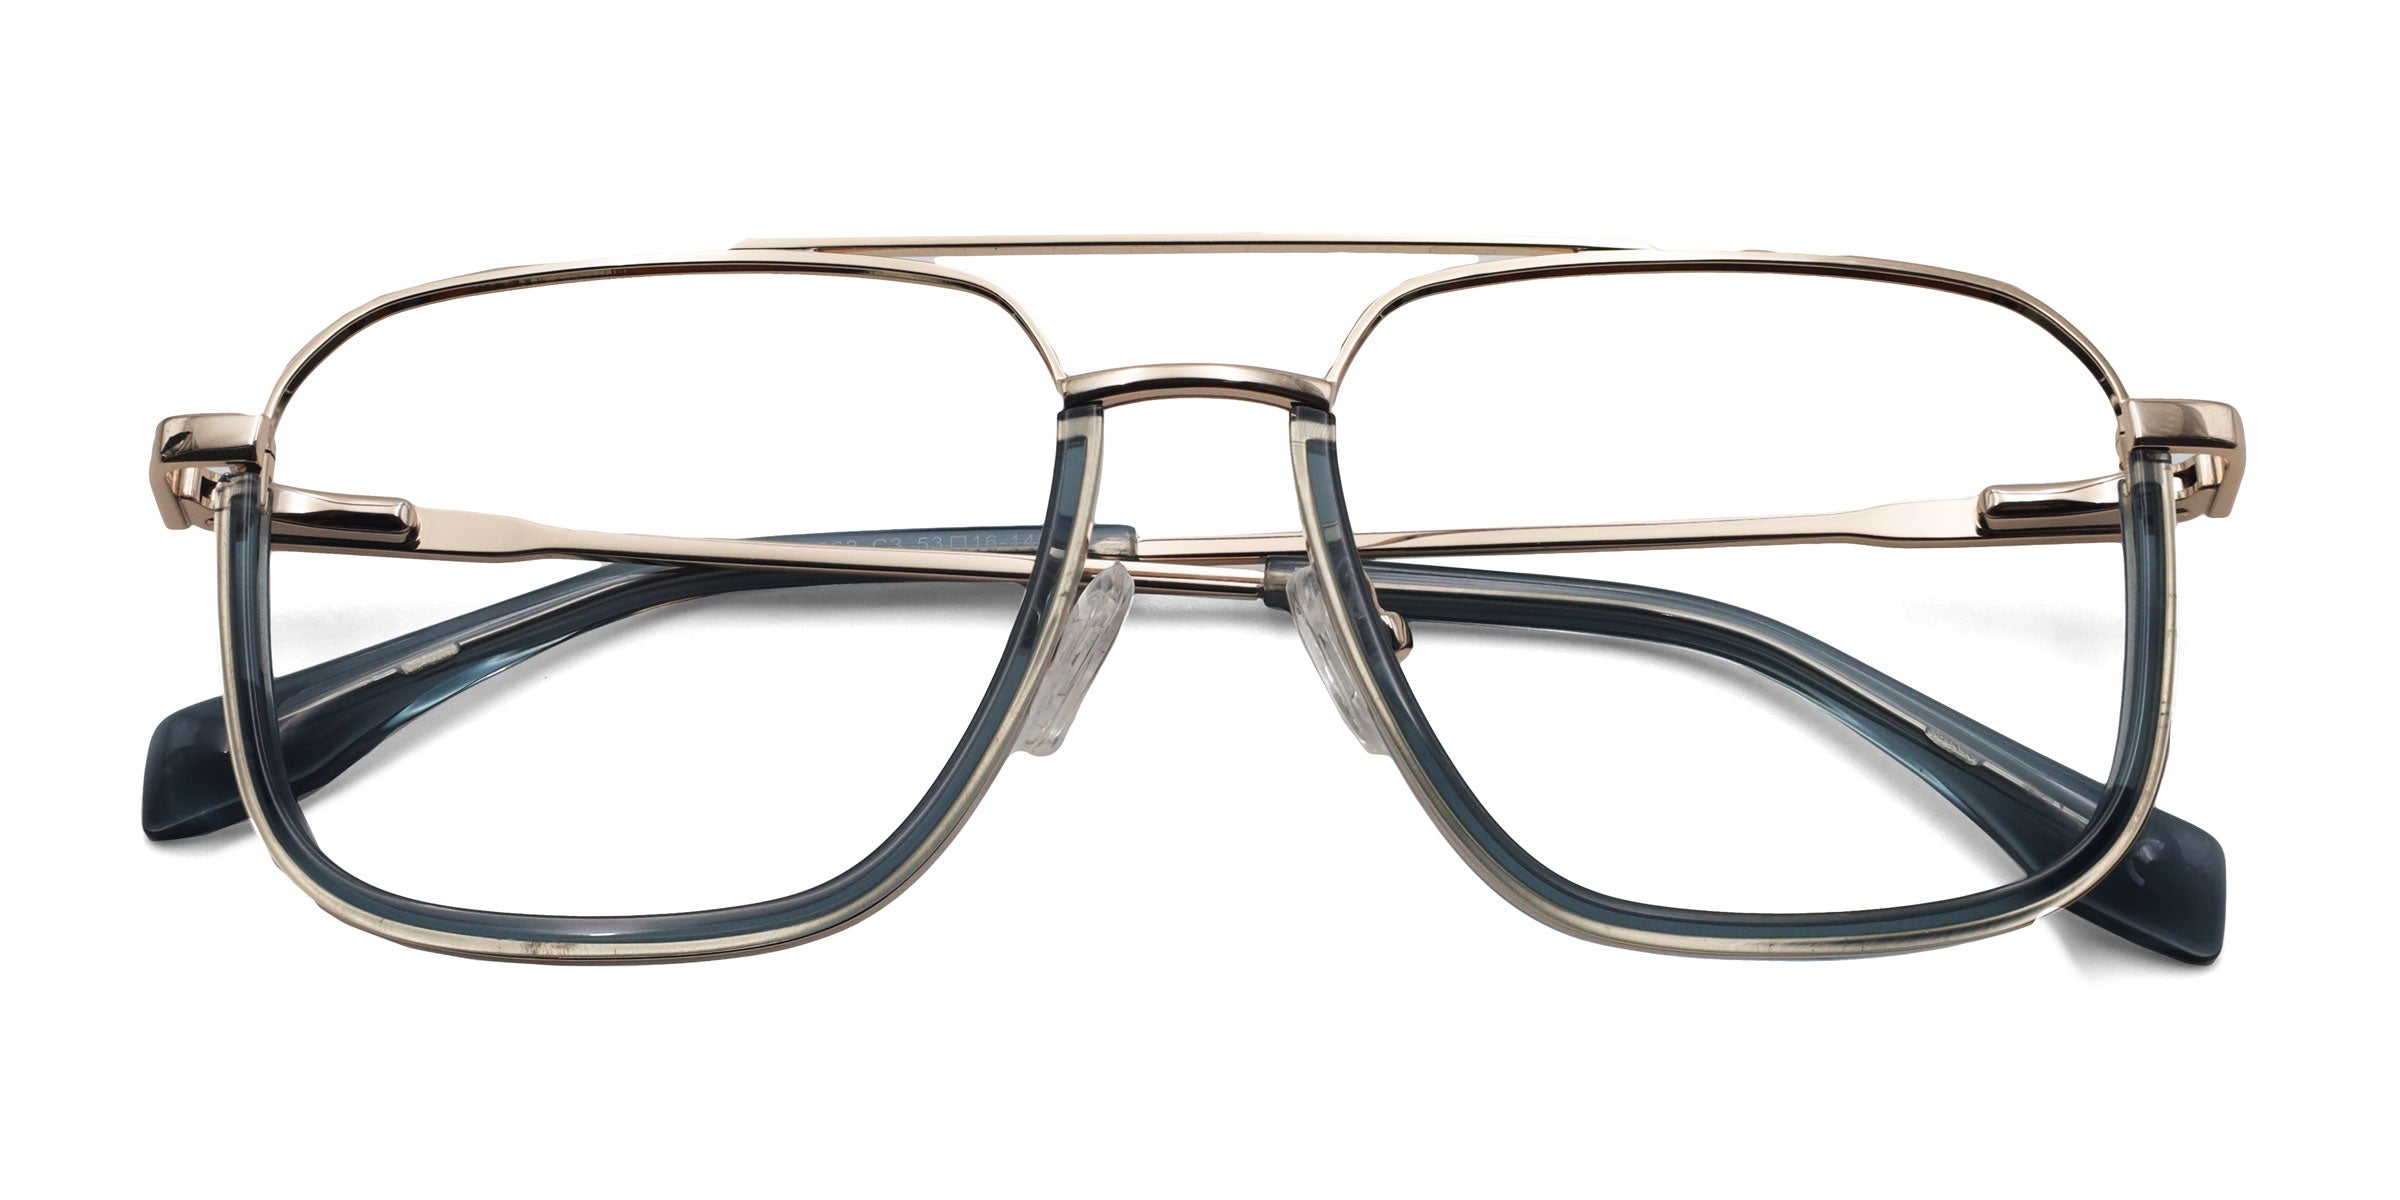 tam aviator gray eyeglasses frames top view